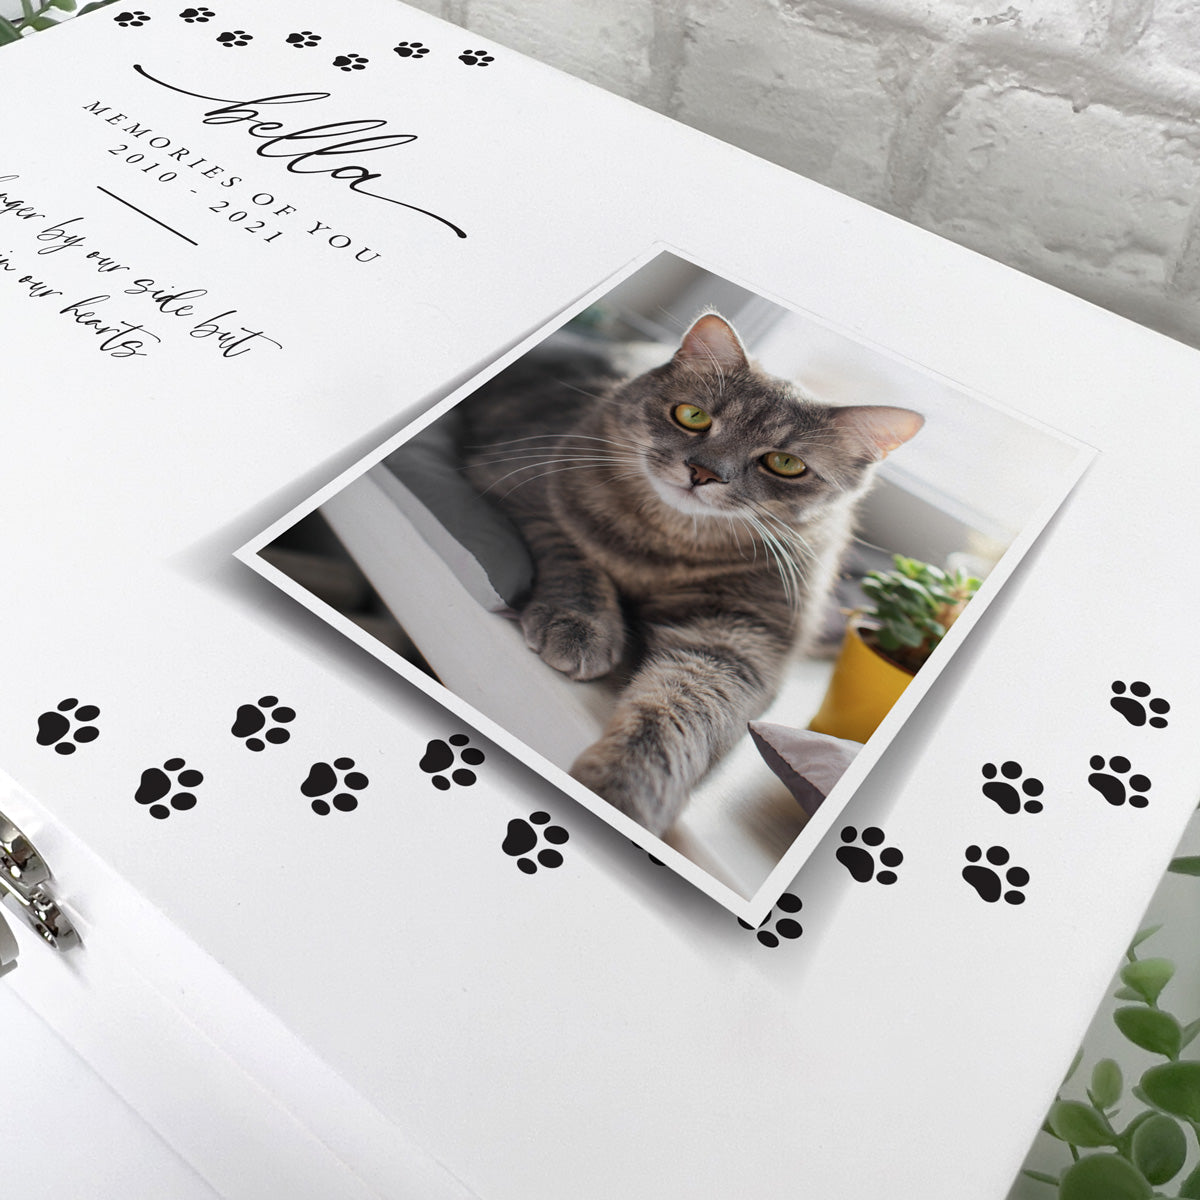 Personalised Paw Prints Luxury Pet Memorial White Wooden Photo Memory Box - 2 Sizes  (27cm | 30cm)